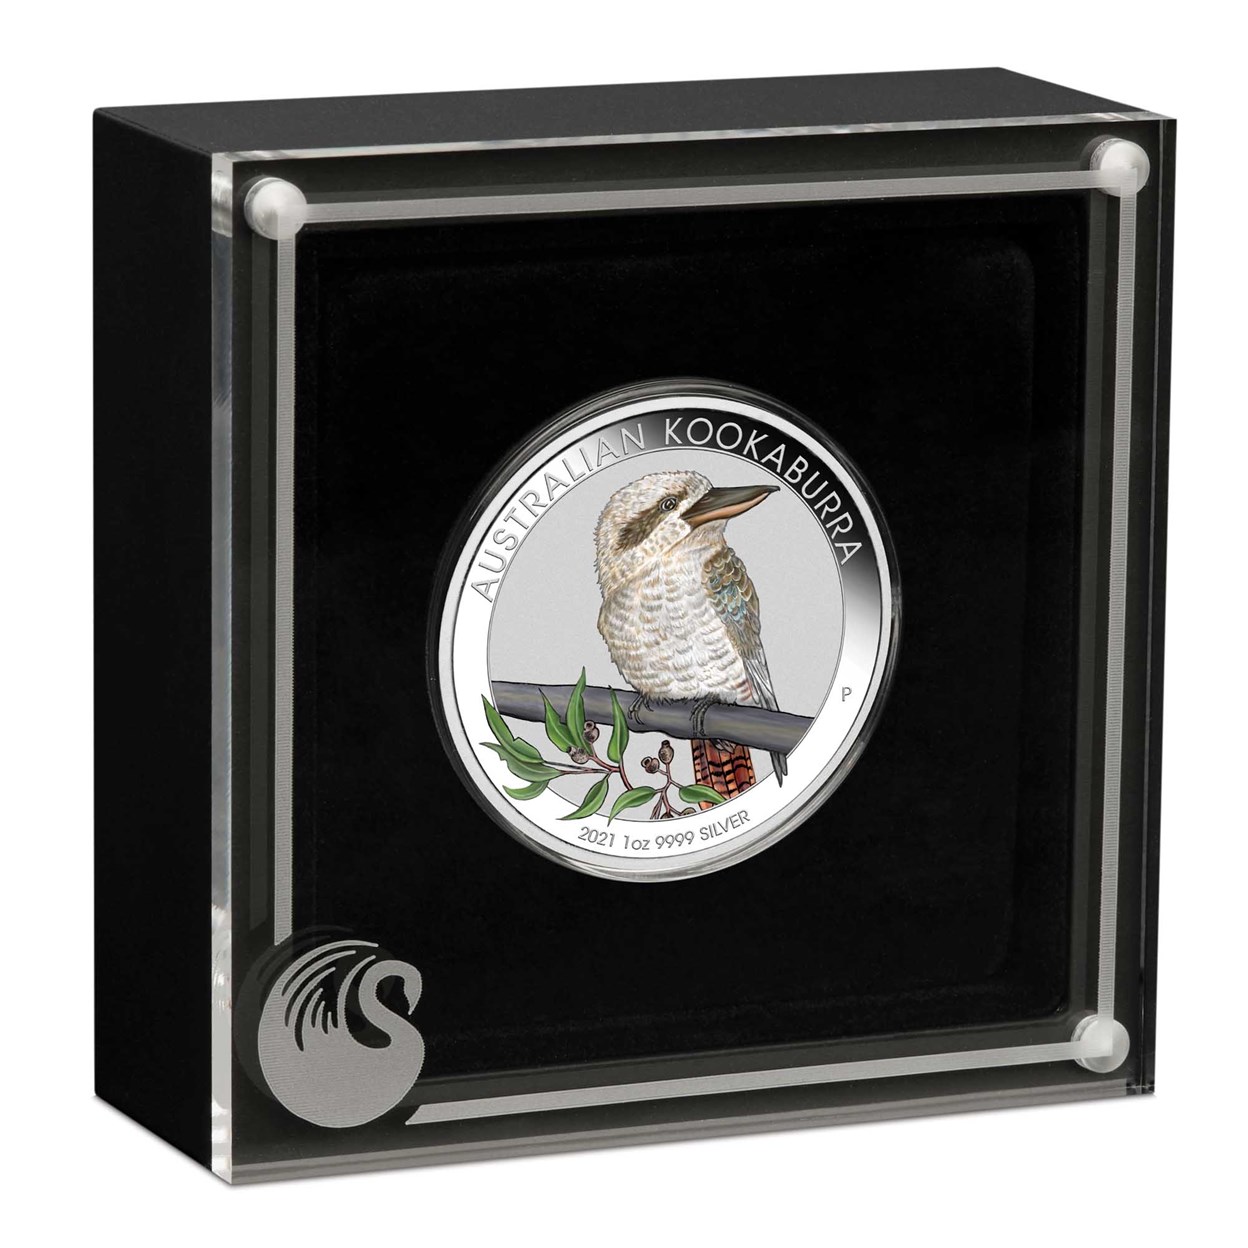 03 2021 Kookaburra 1oz Silver Bullion Coloured Coin InCase HighRes